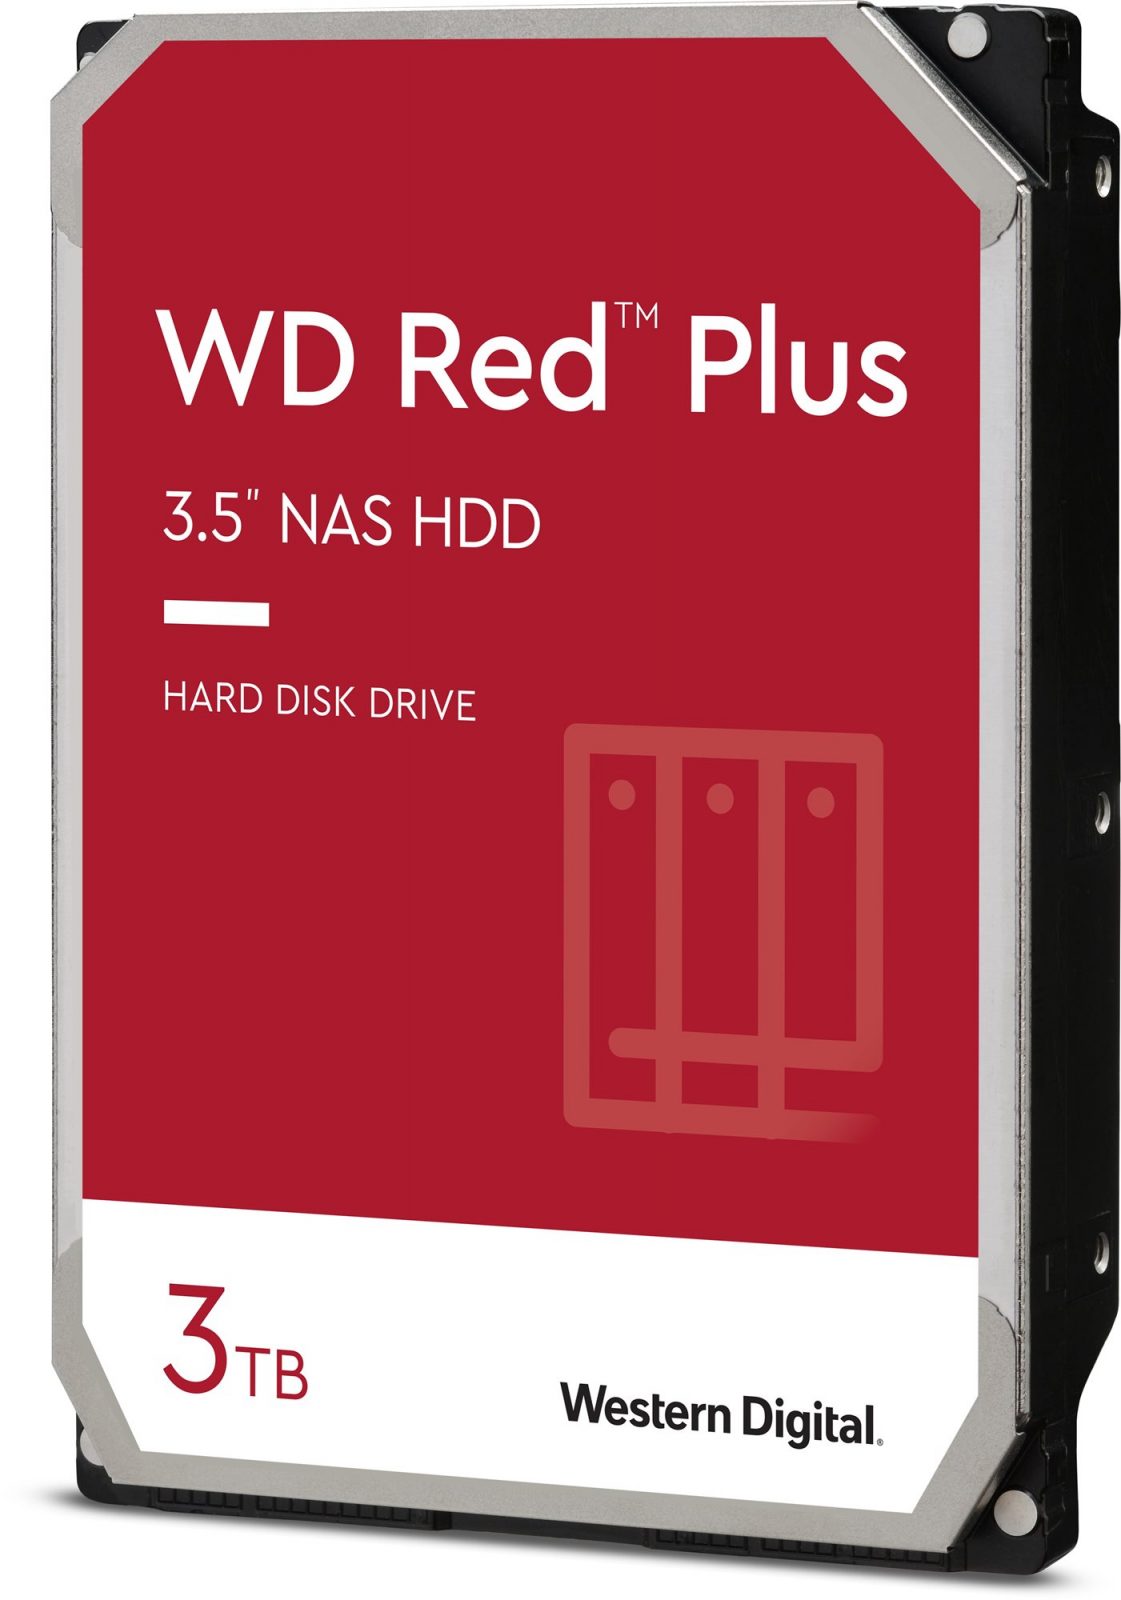 Merevlemez WD Red Plus 3 TB